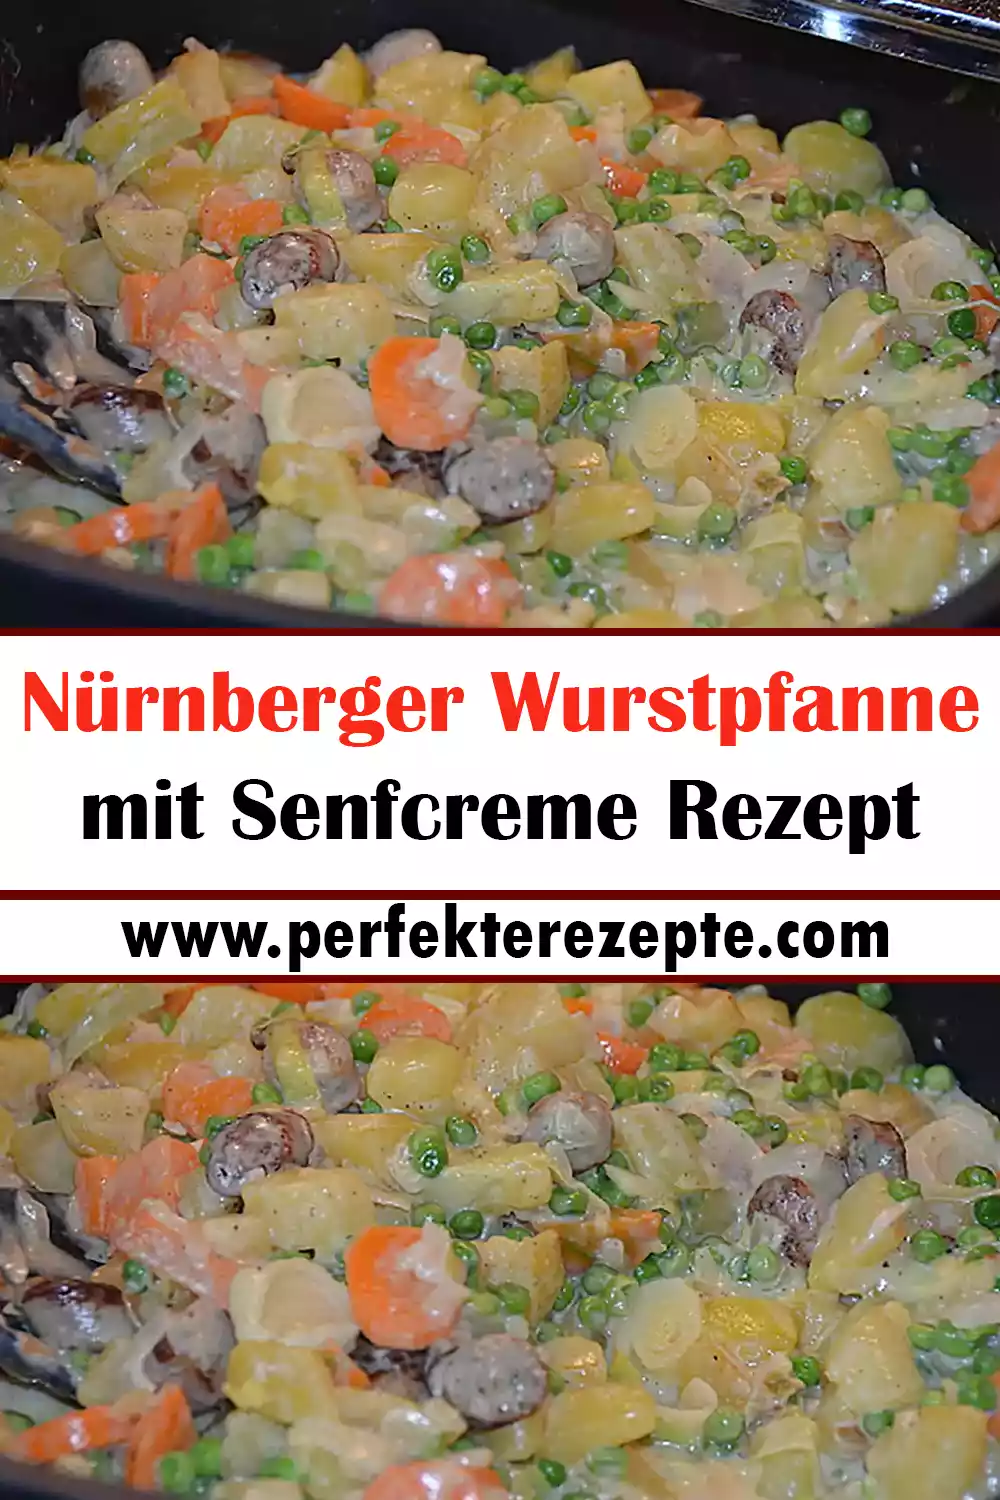 Nürnberger Wurstpfanne mit Senfcreme Rezept